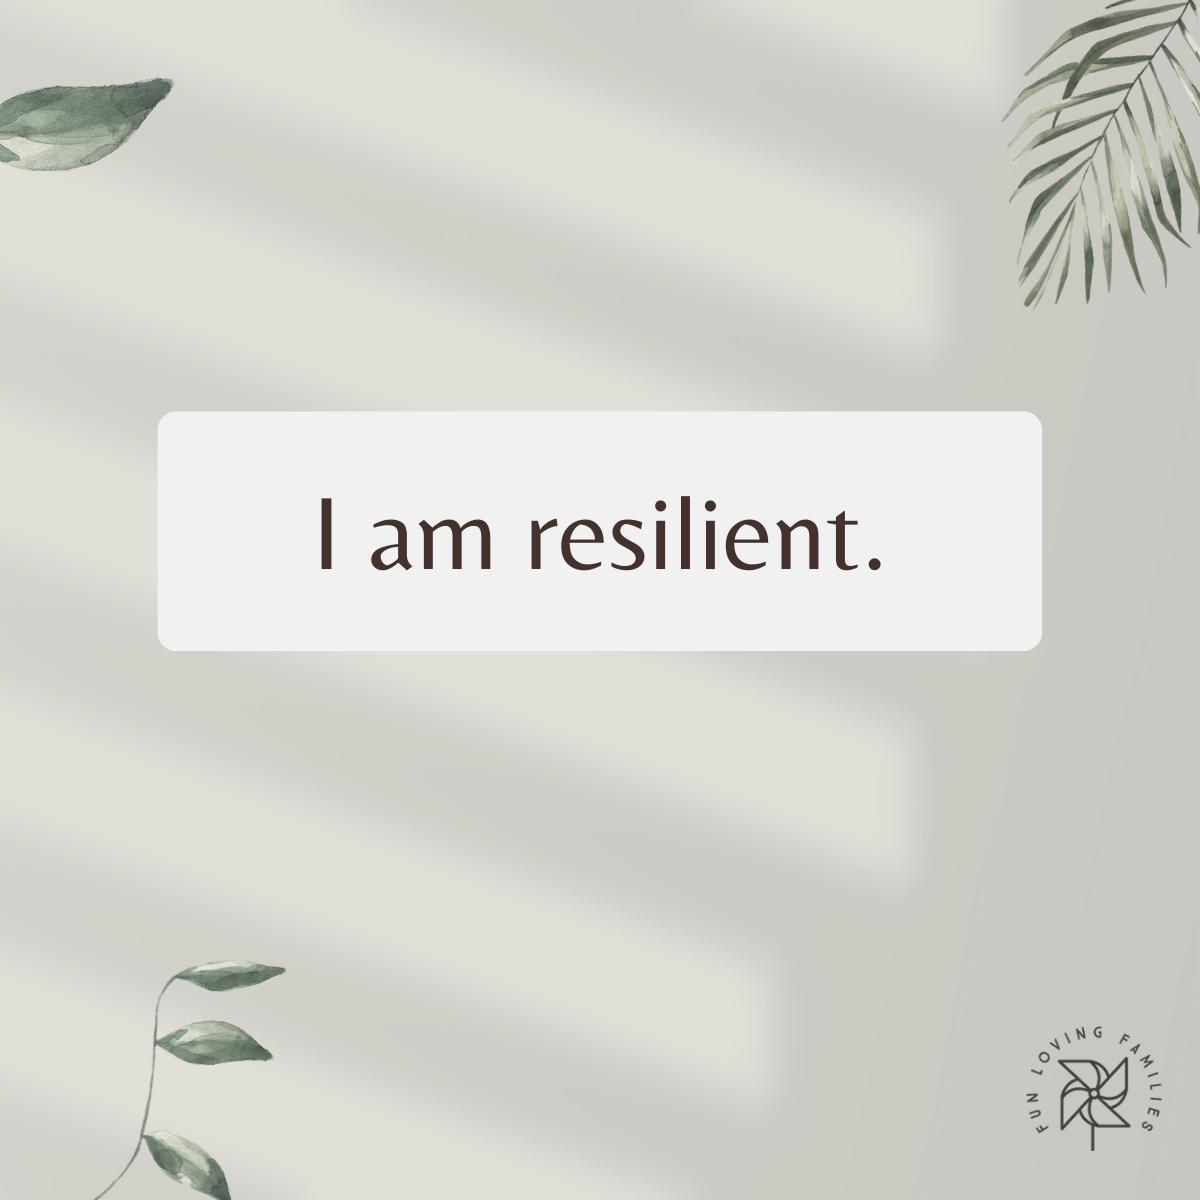 I am resilient affirmation